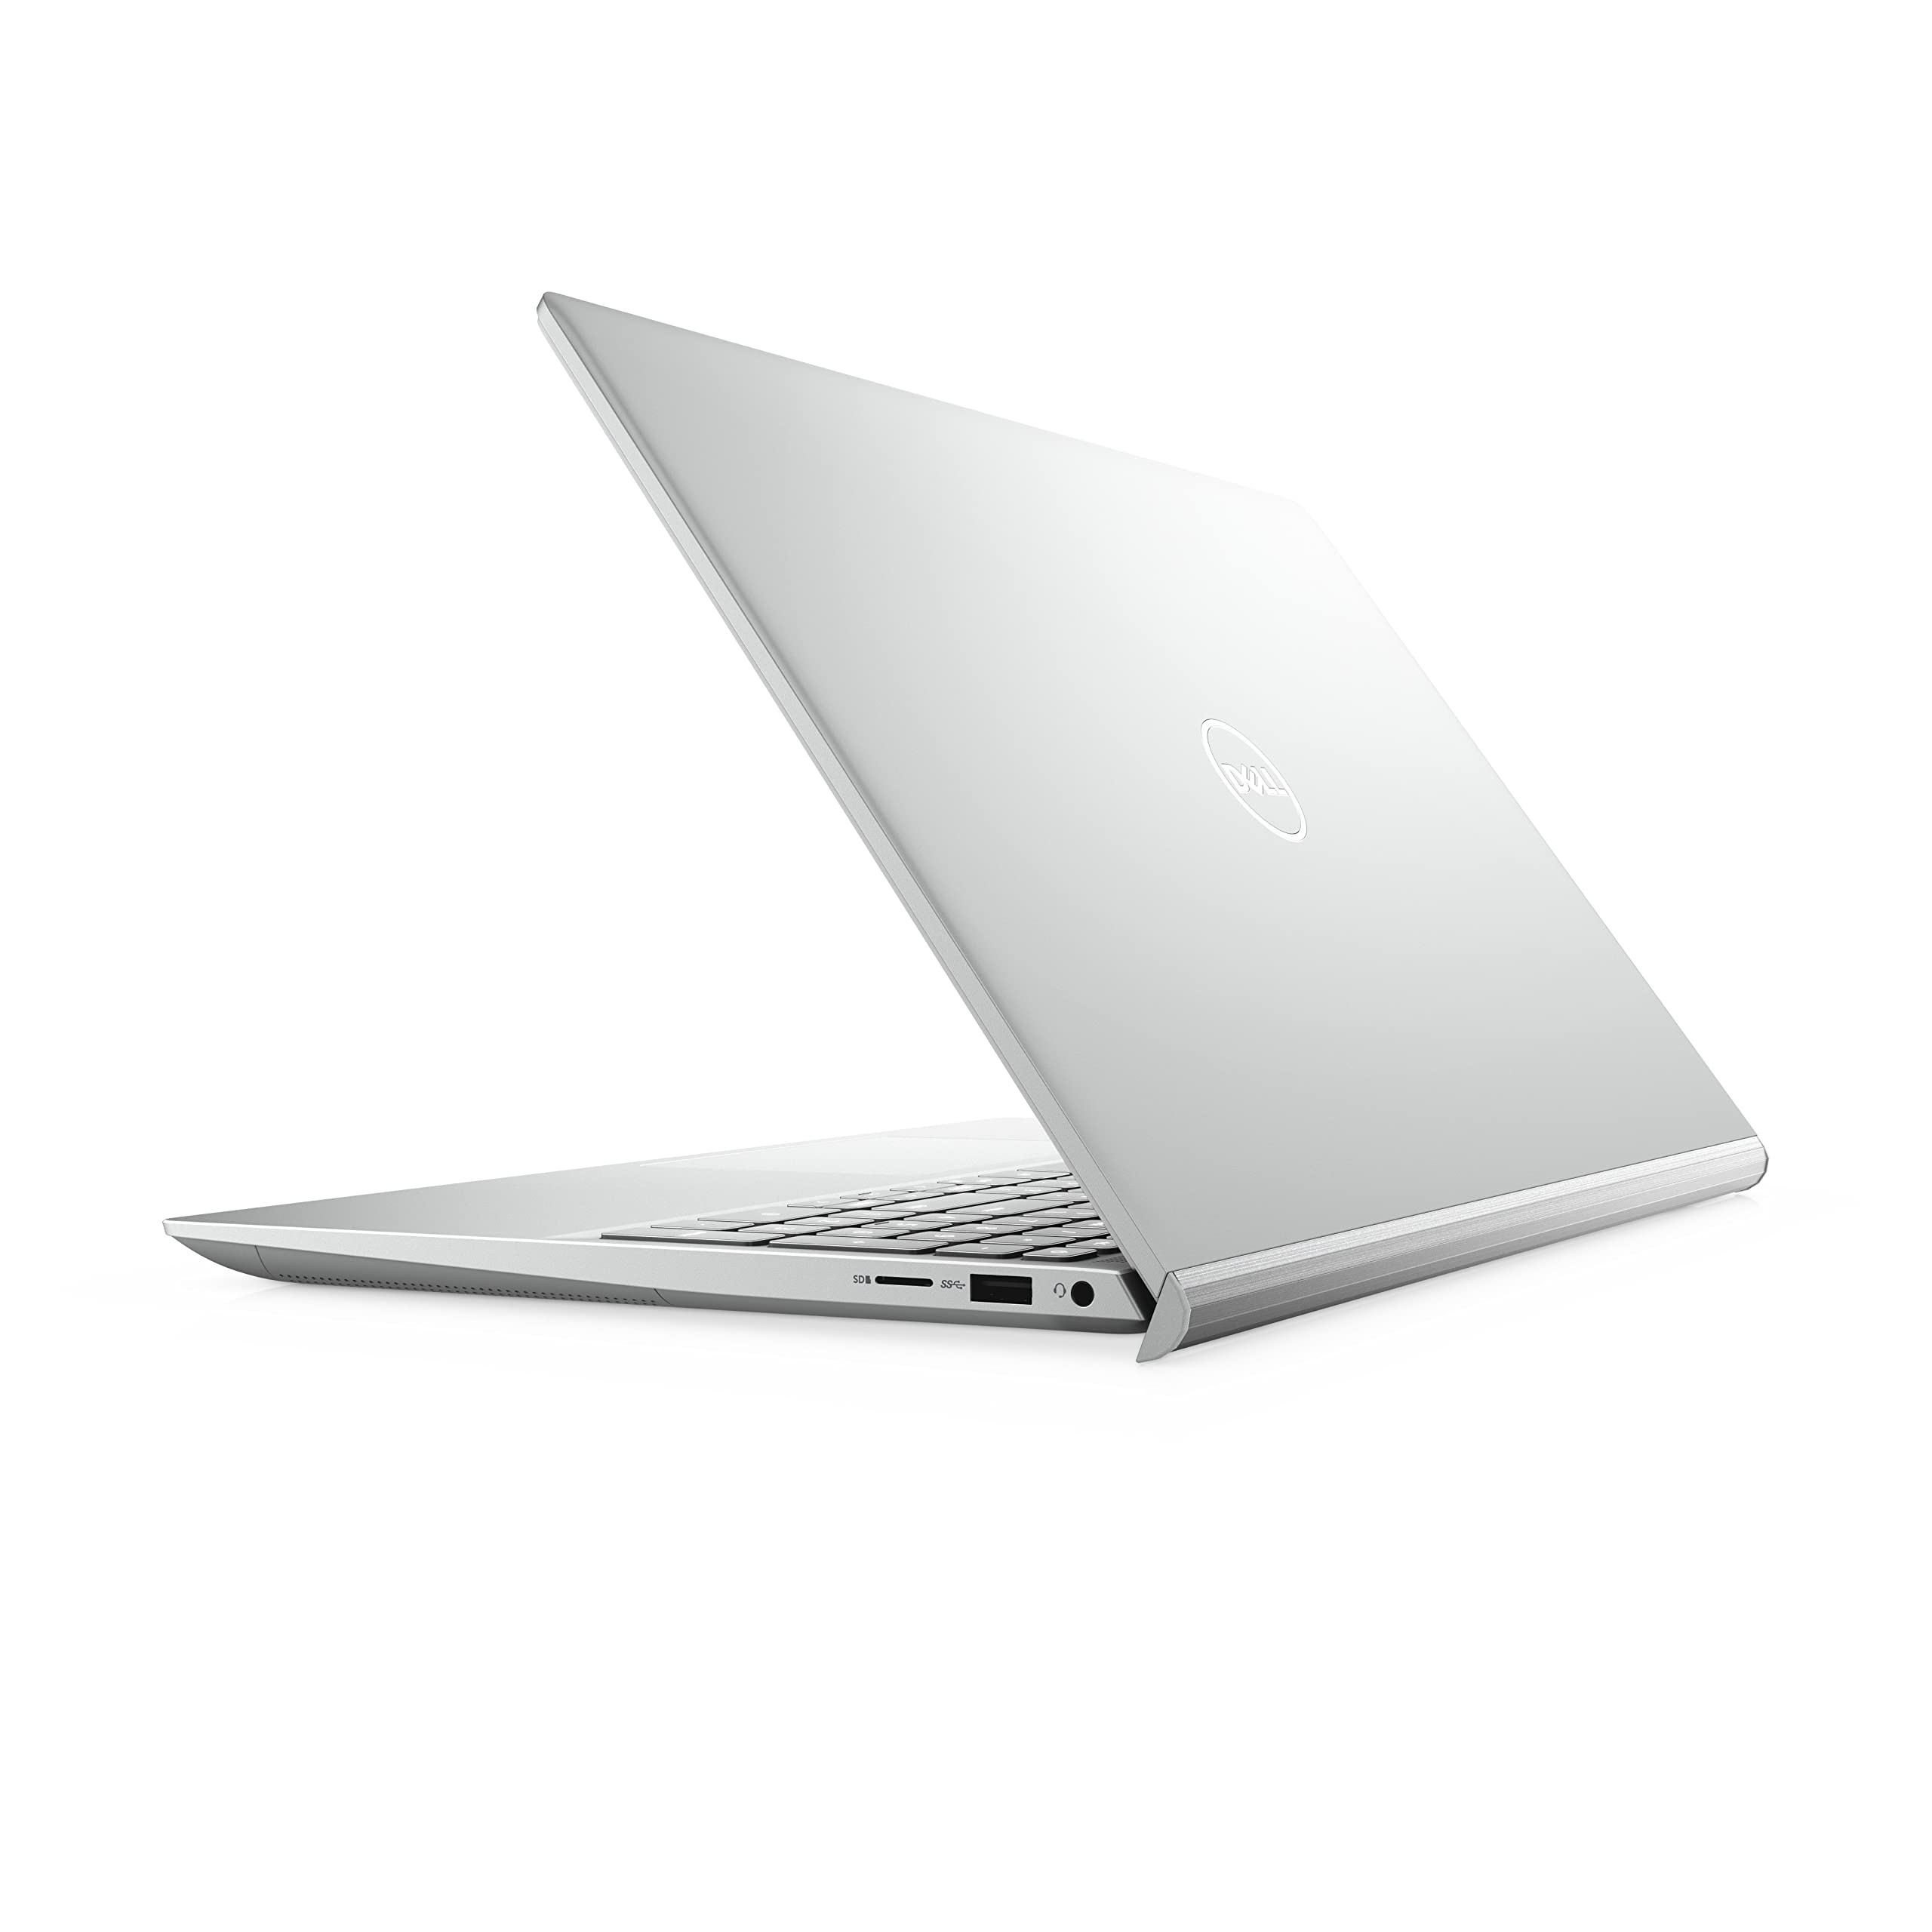 Dell Inspiron 15 7501 15.6” FullHD 1TB SSD Laptop – i7-10750H (6 Core, 5GHz), NVidia GeForce GTX 1650, 16GB RAM, WIFI 6 & Bluetooth 5.2, Backlit Keys, FREE Upgrade to Windows 11 Pro (Renewed)